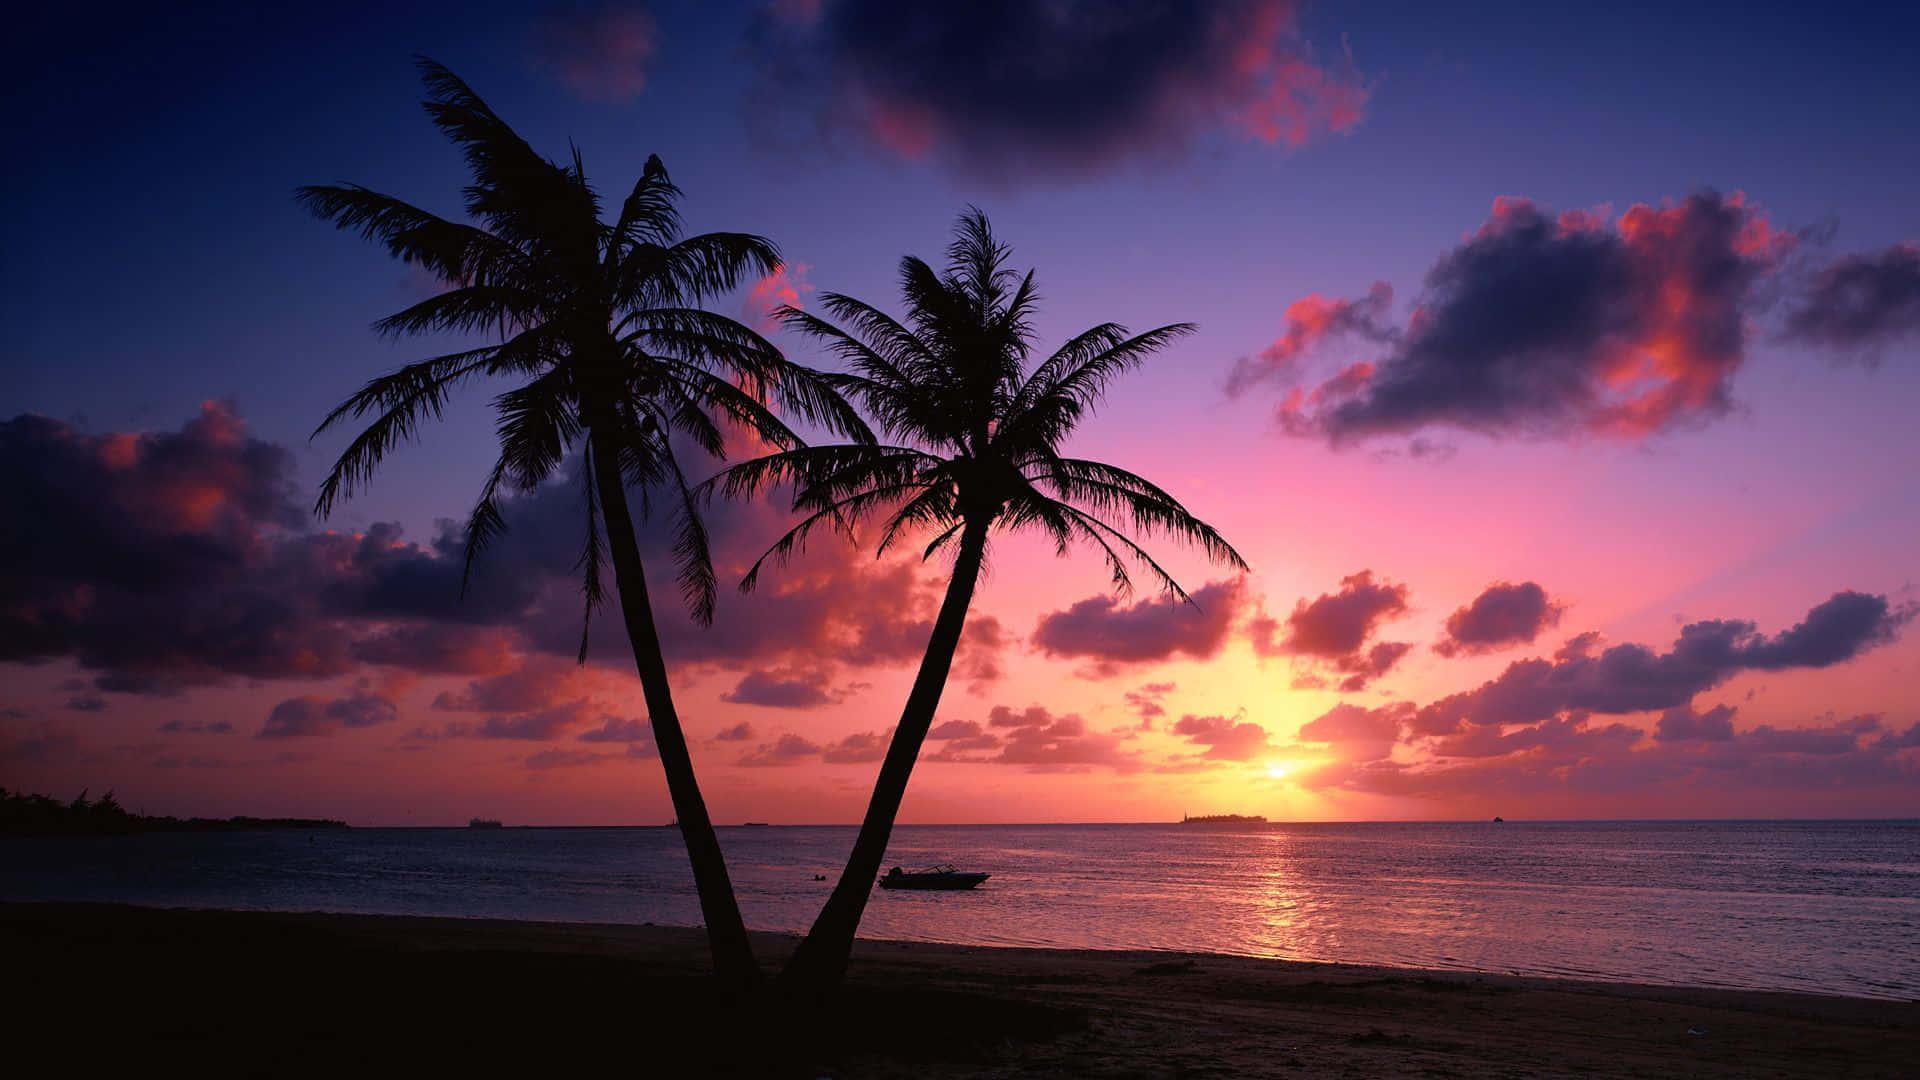 "Relaxing sunset on a tropical beach"